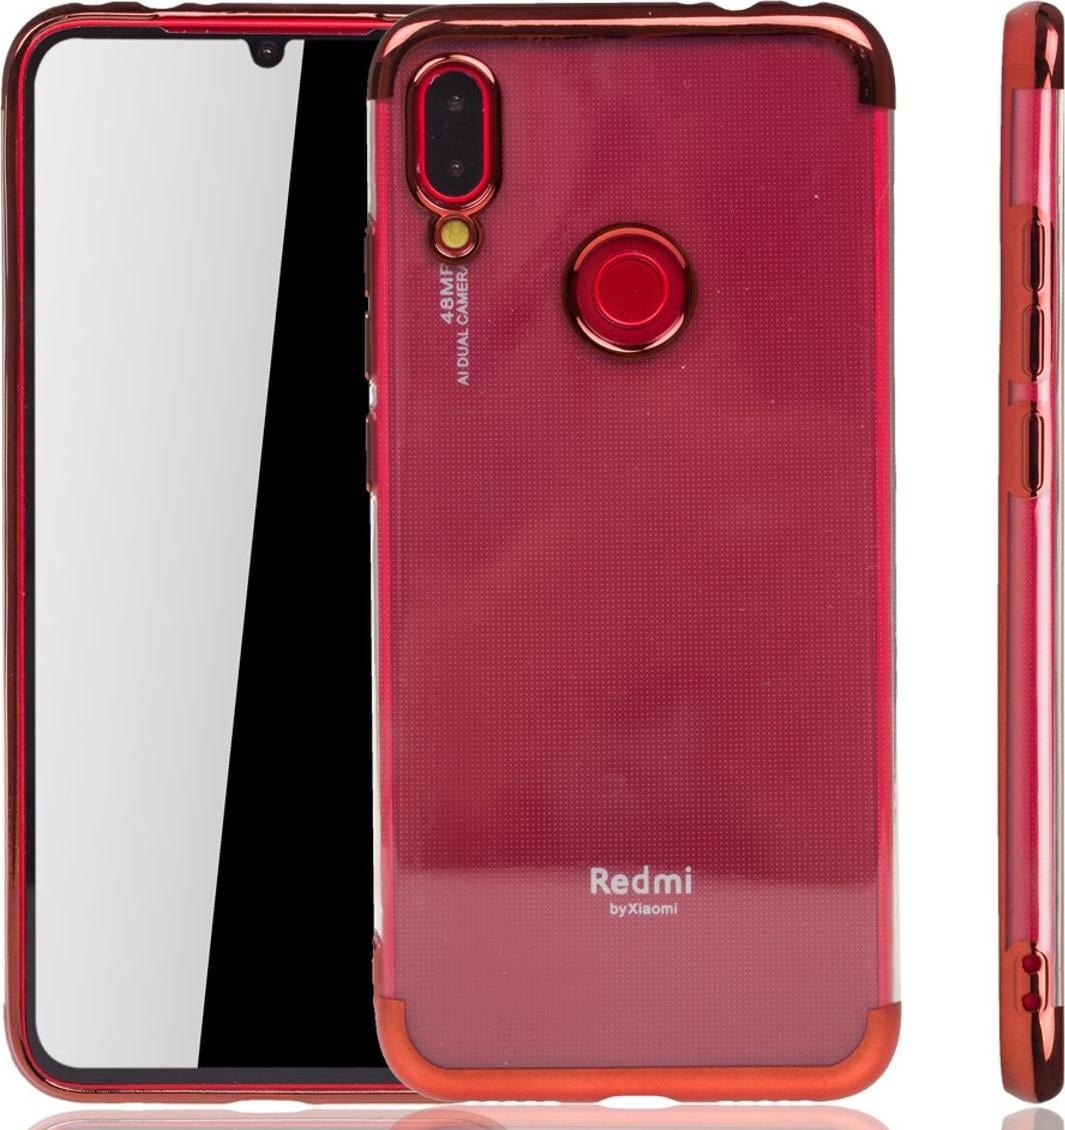 König Design Xiaomi Redmi Note 7 Hülle Case Handy Cover Schutz Tasche Schutzhülle Bumper Rot (Xiaomi Redmi Note 7 Pro, Xiaomi Redmi Note 7), Smartphone Hülle, Rot